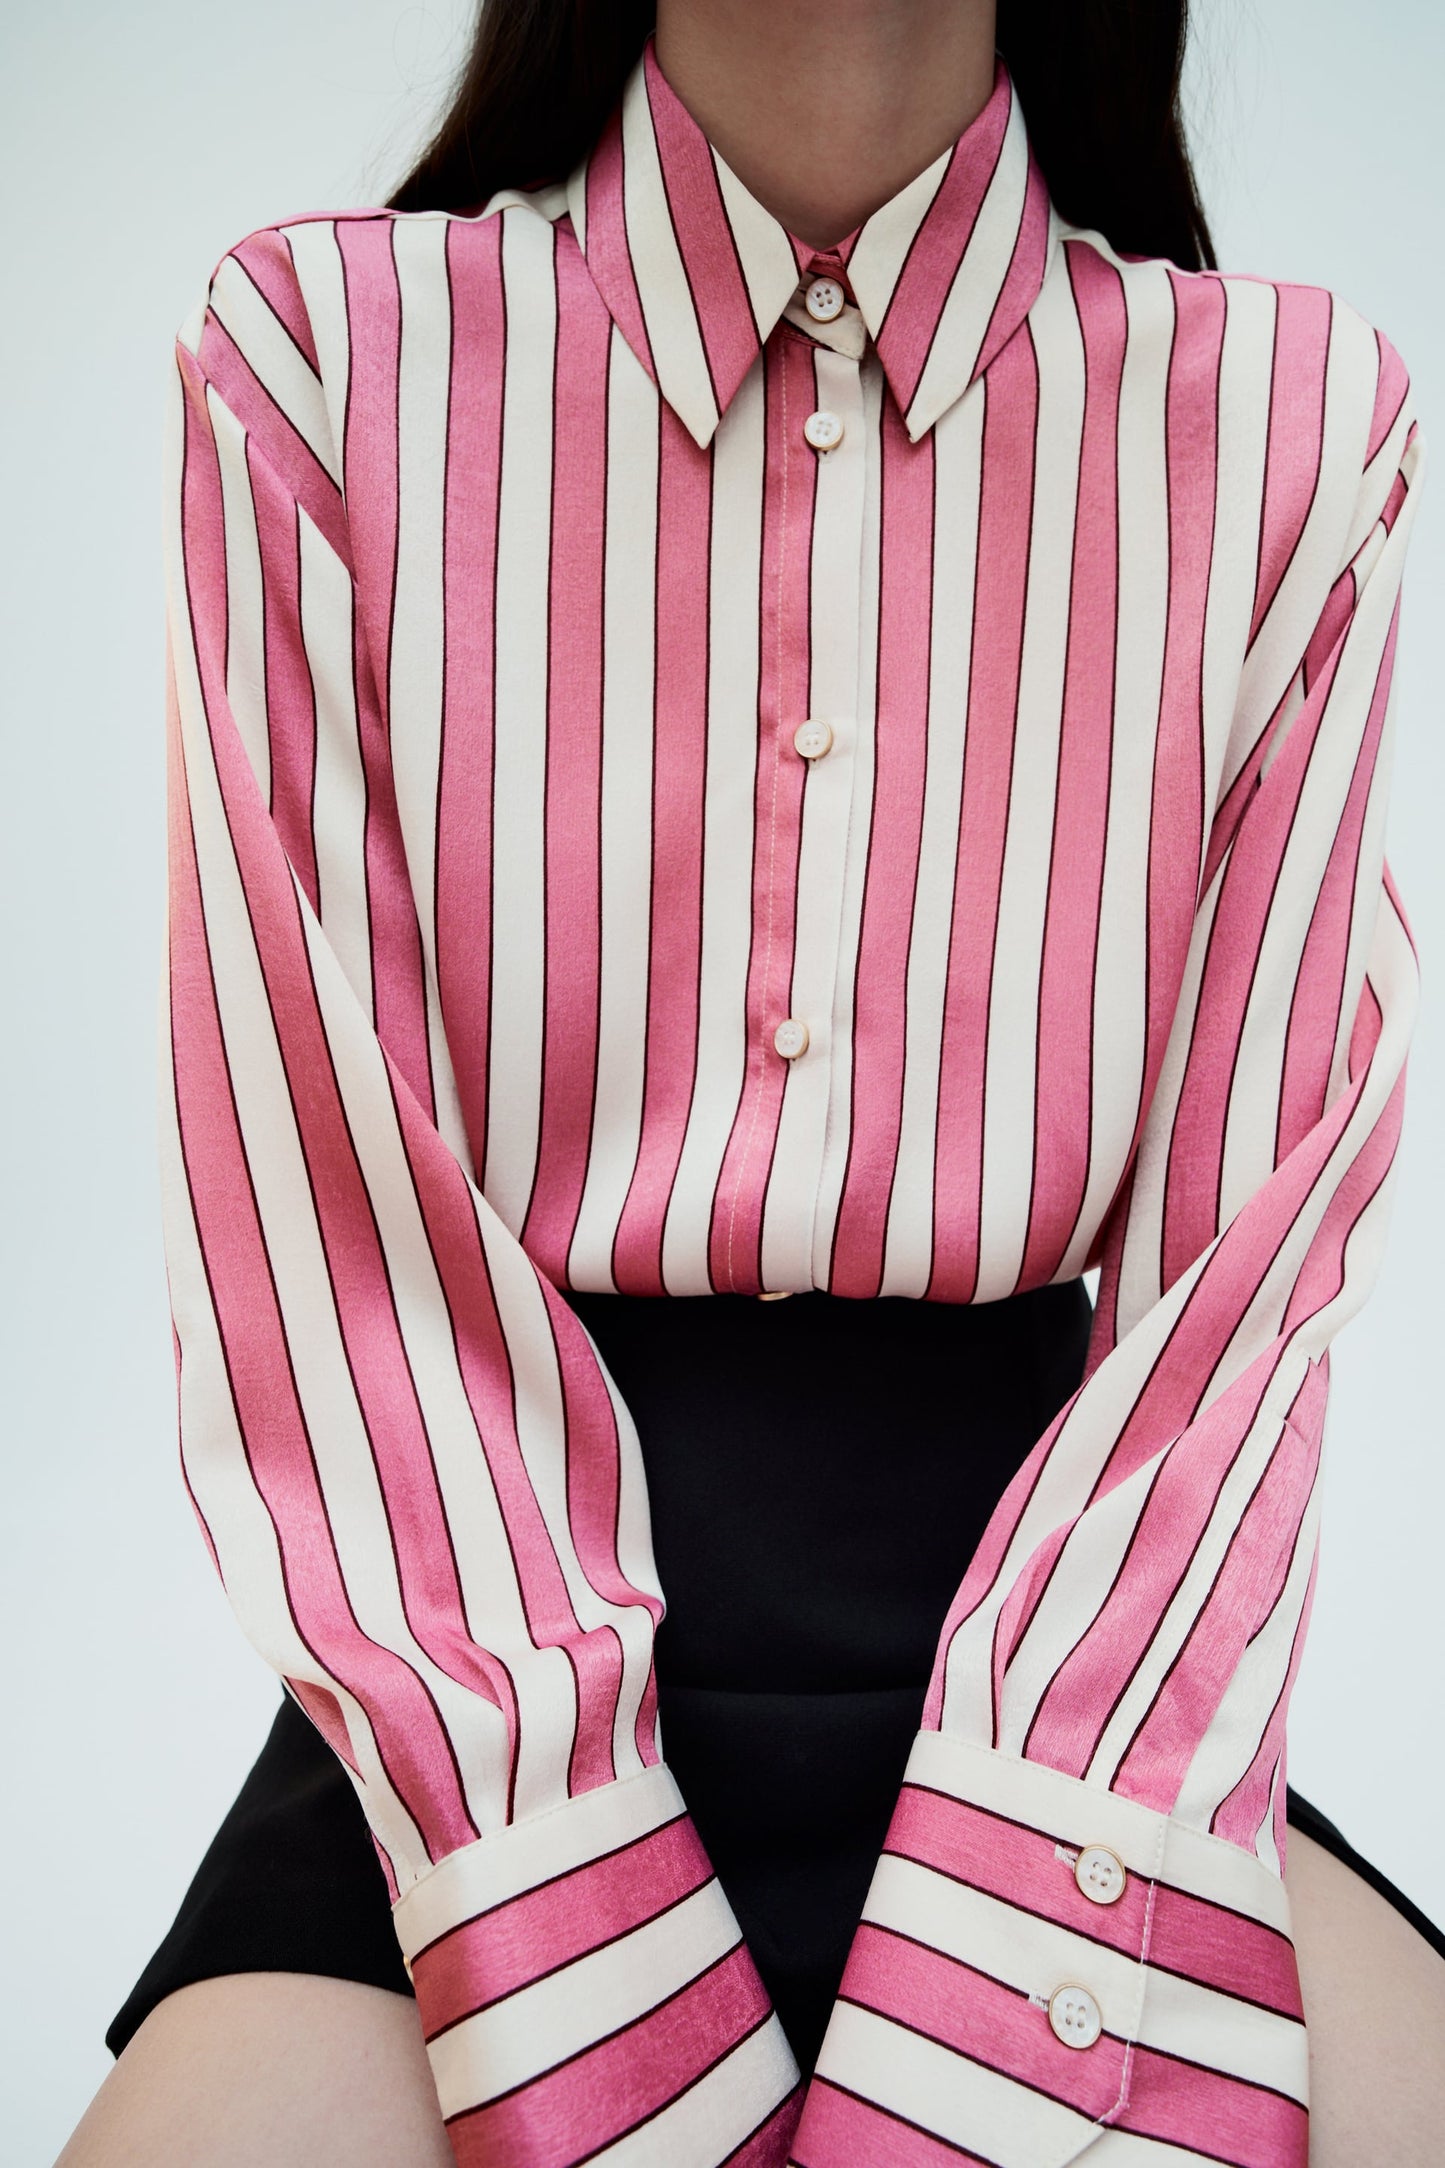 Striped satin shirt